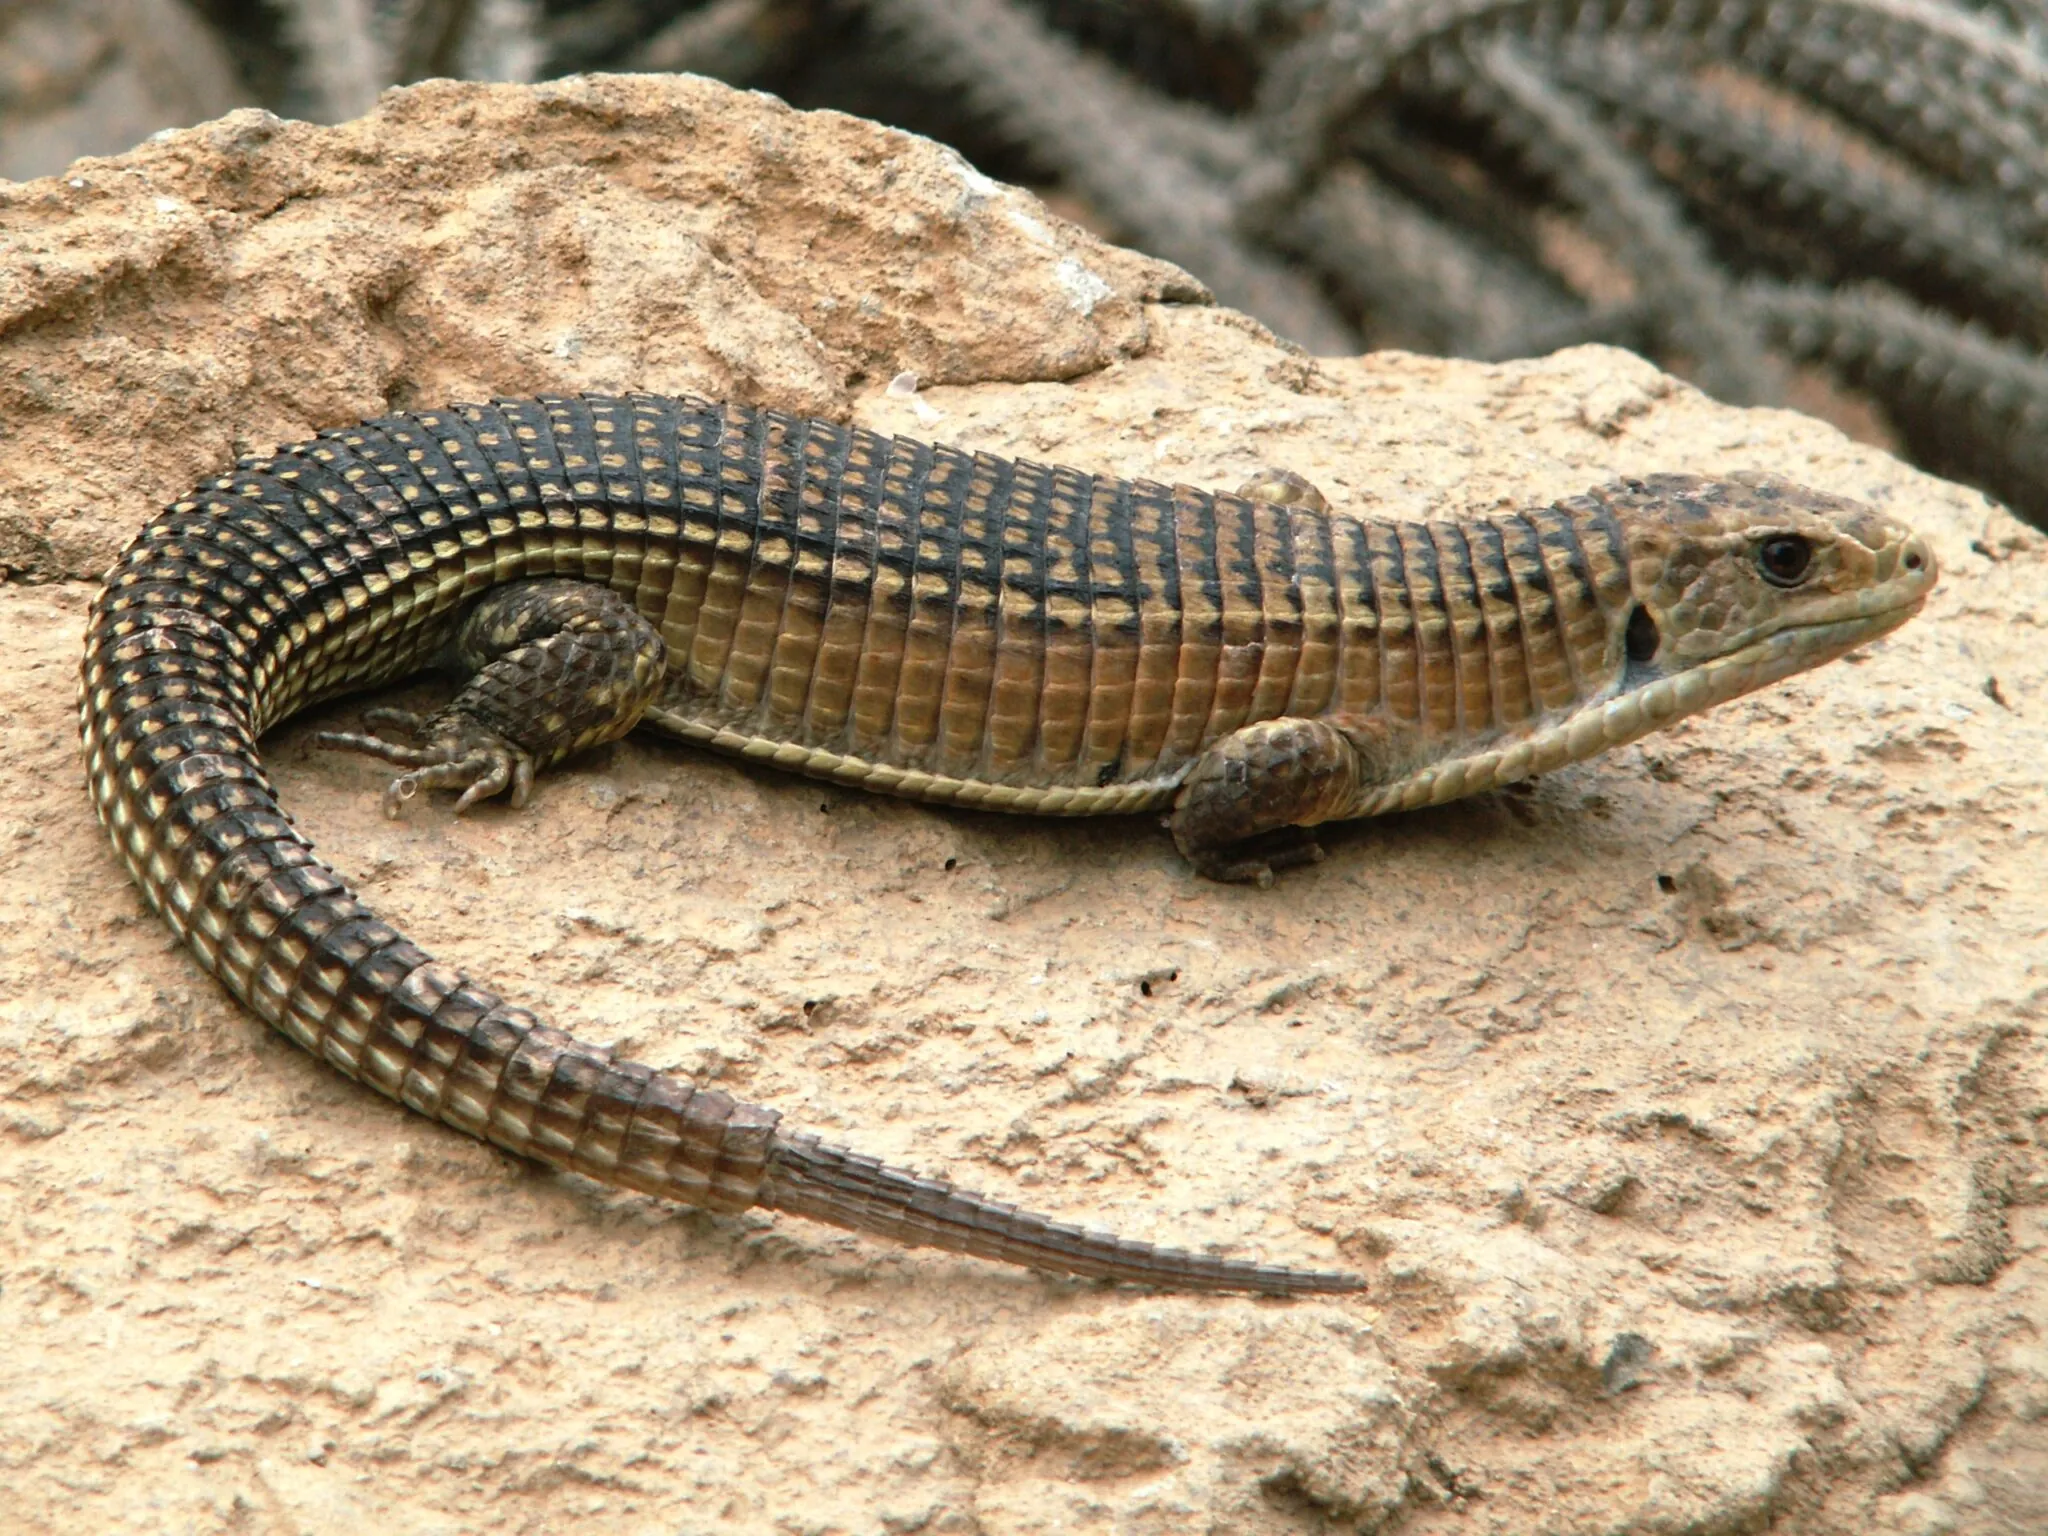 Plated lizard on a rock